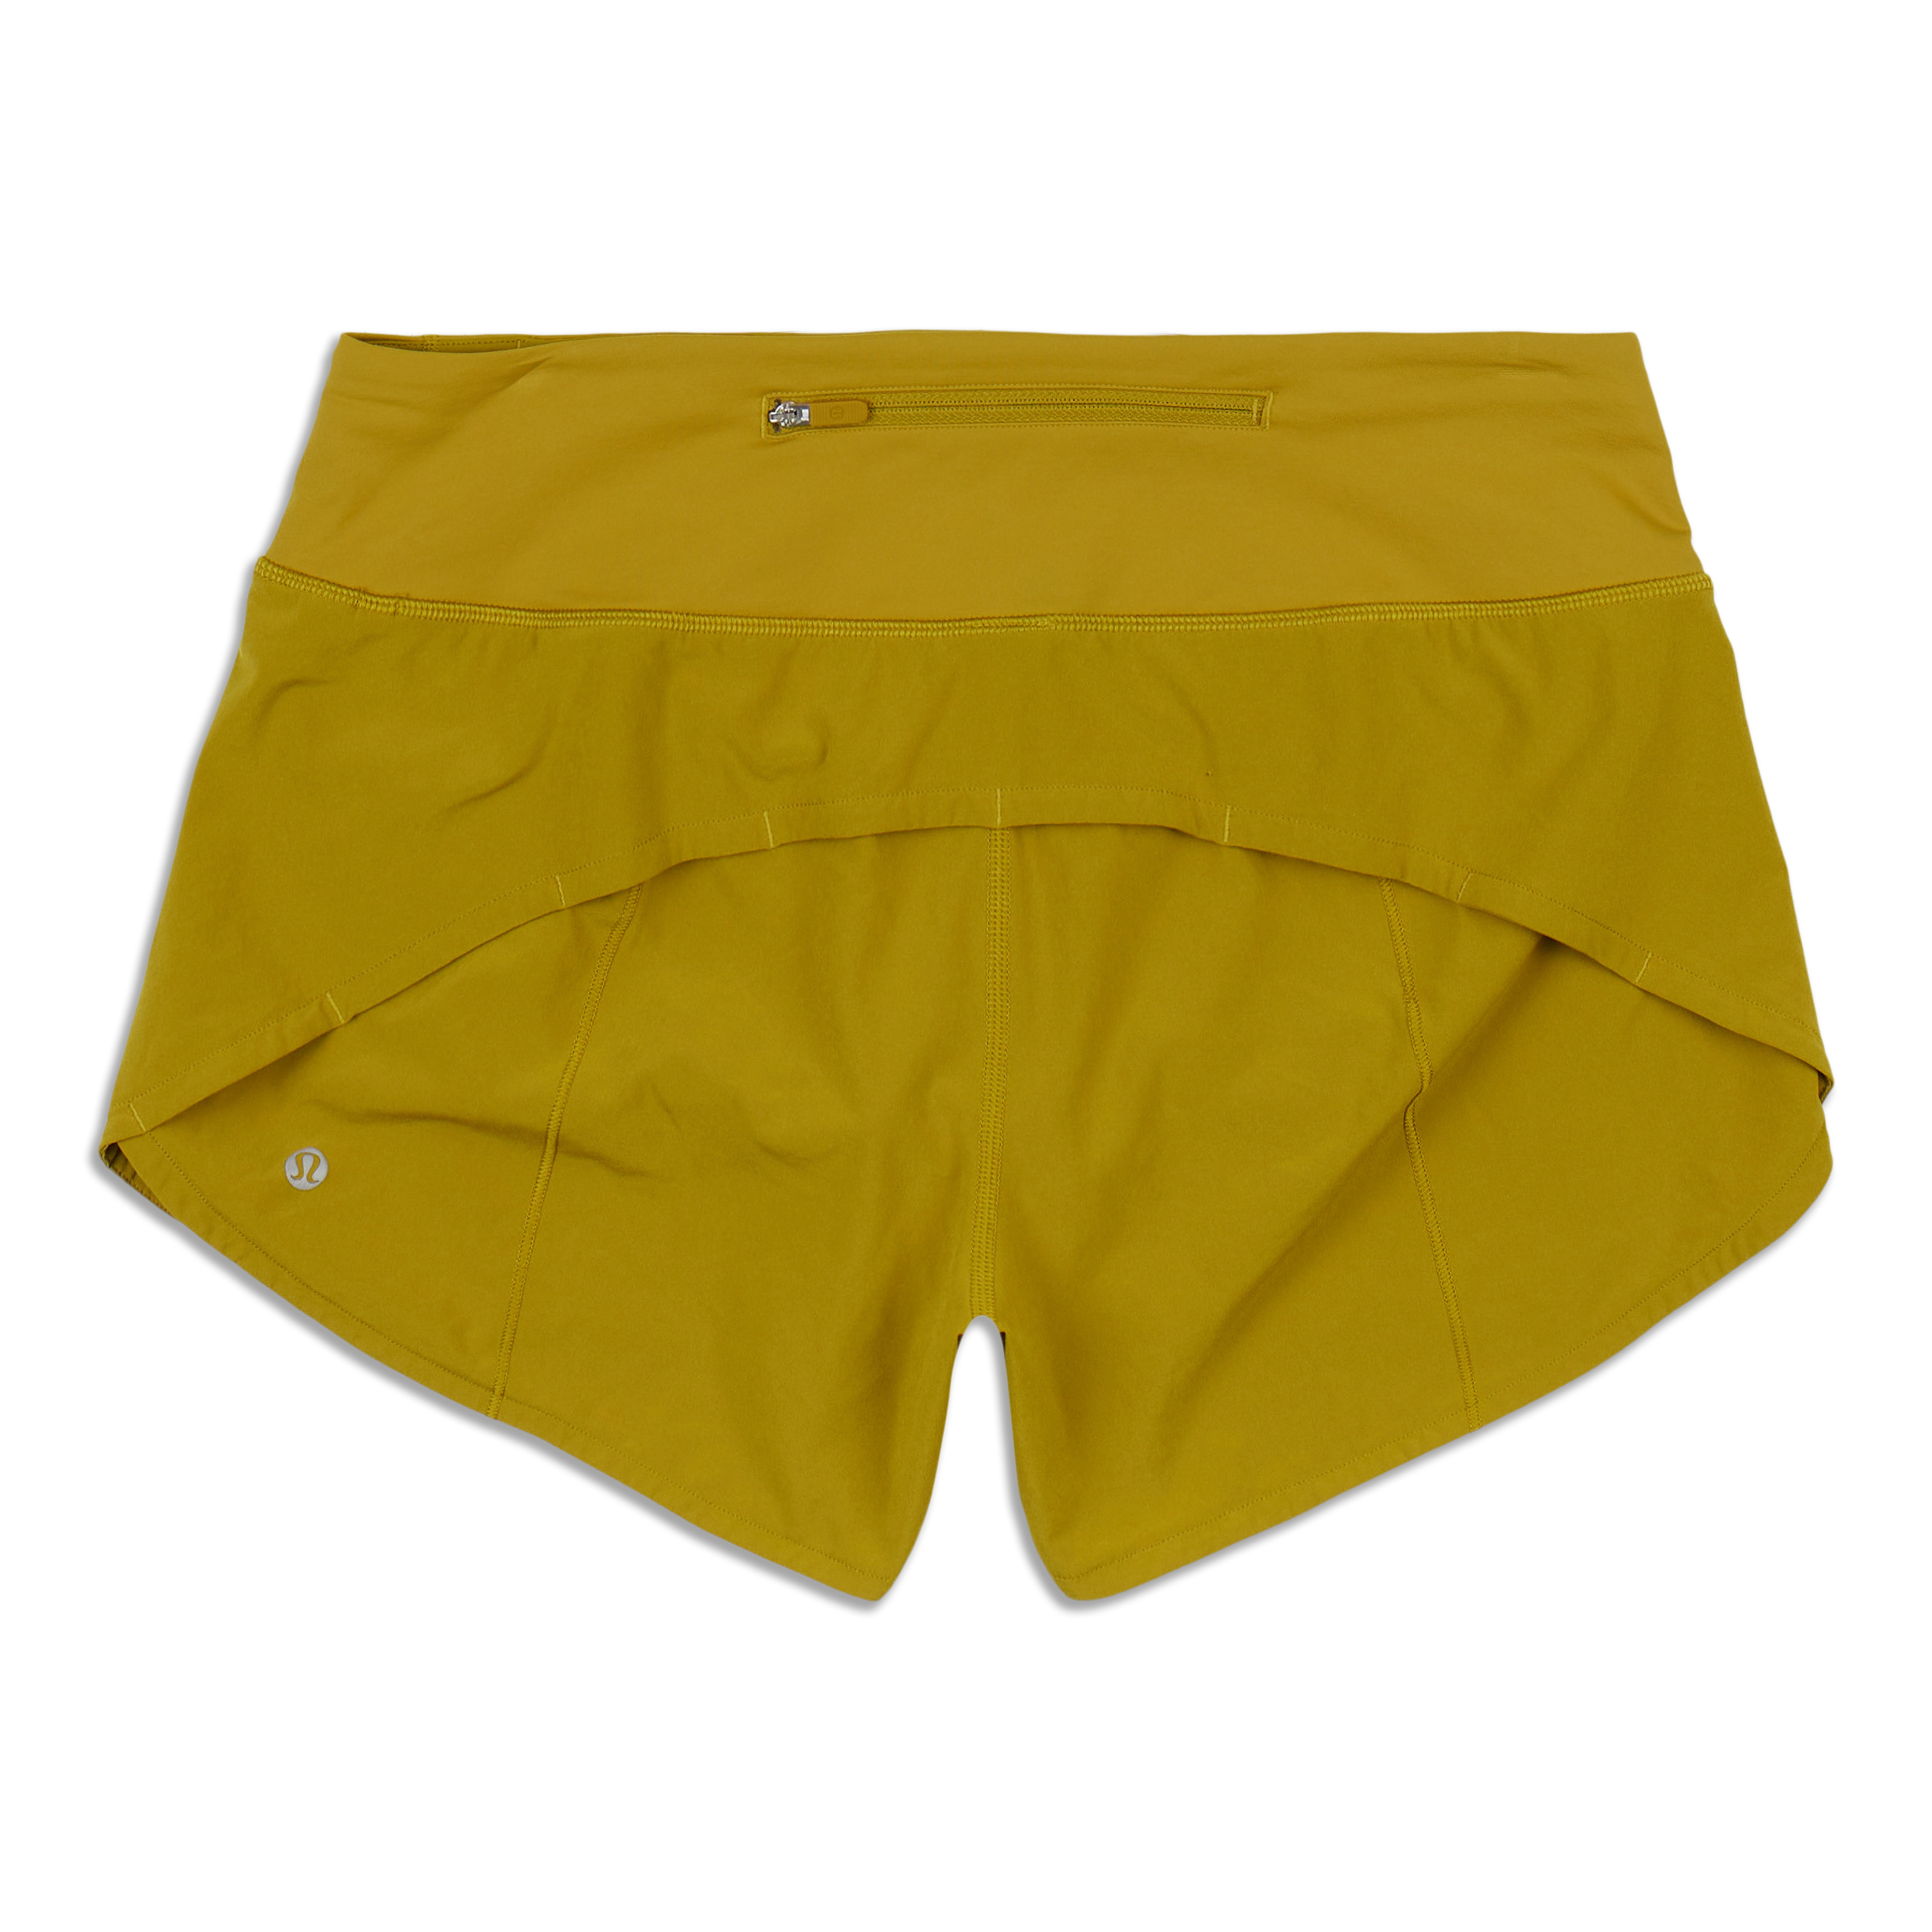 Lululemon Speed Up Low-rise Lined Shorts 2.5 In Highlight Orange